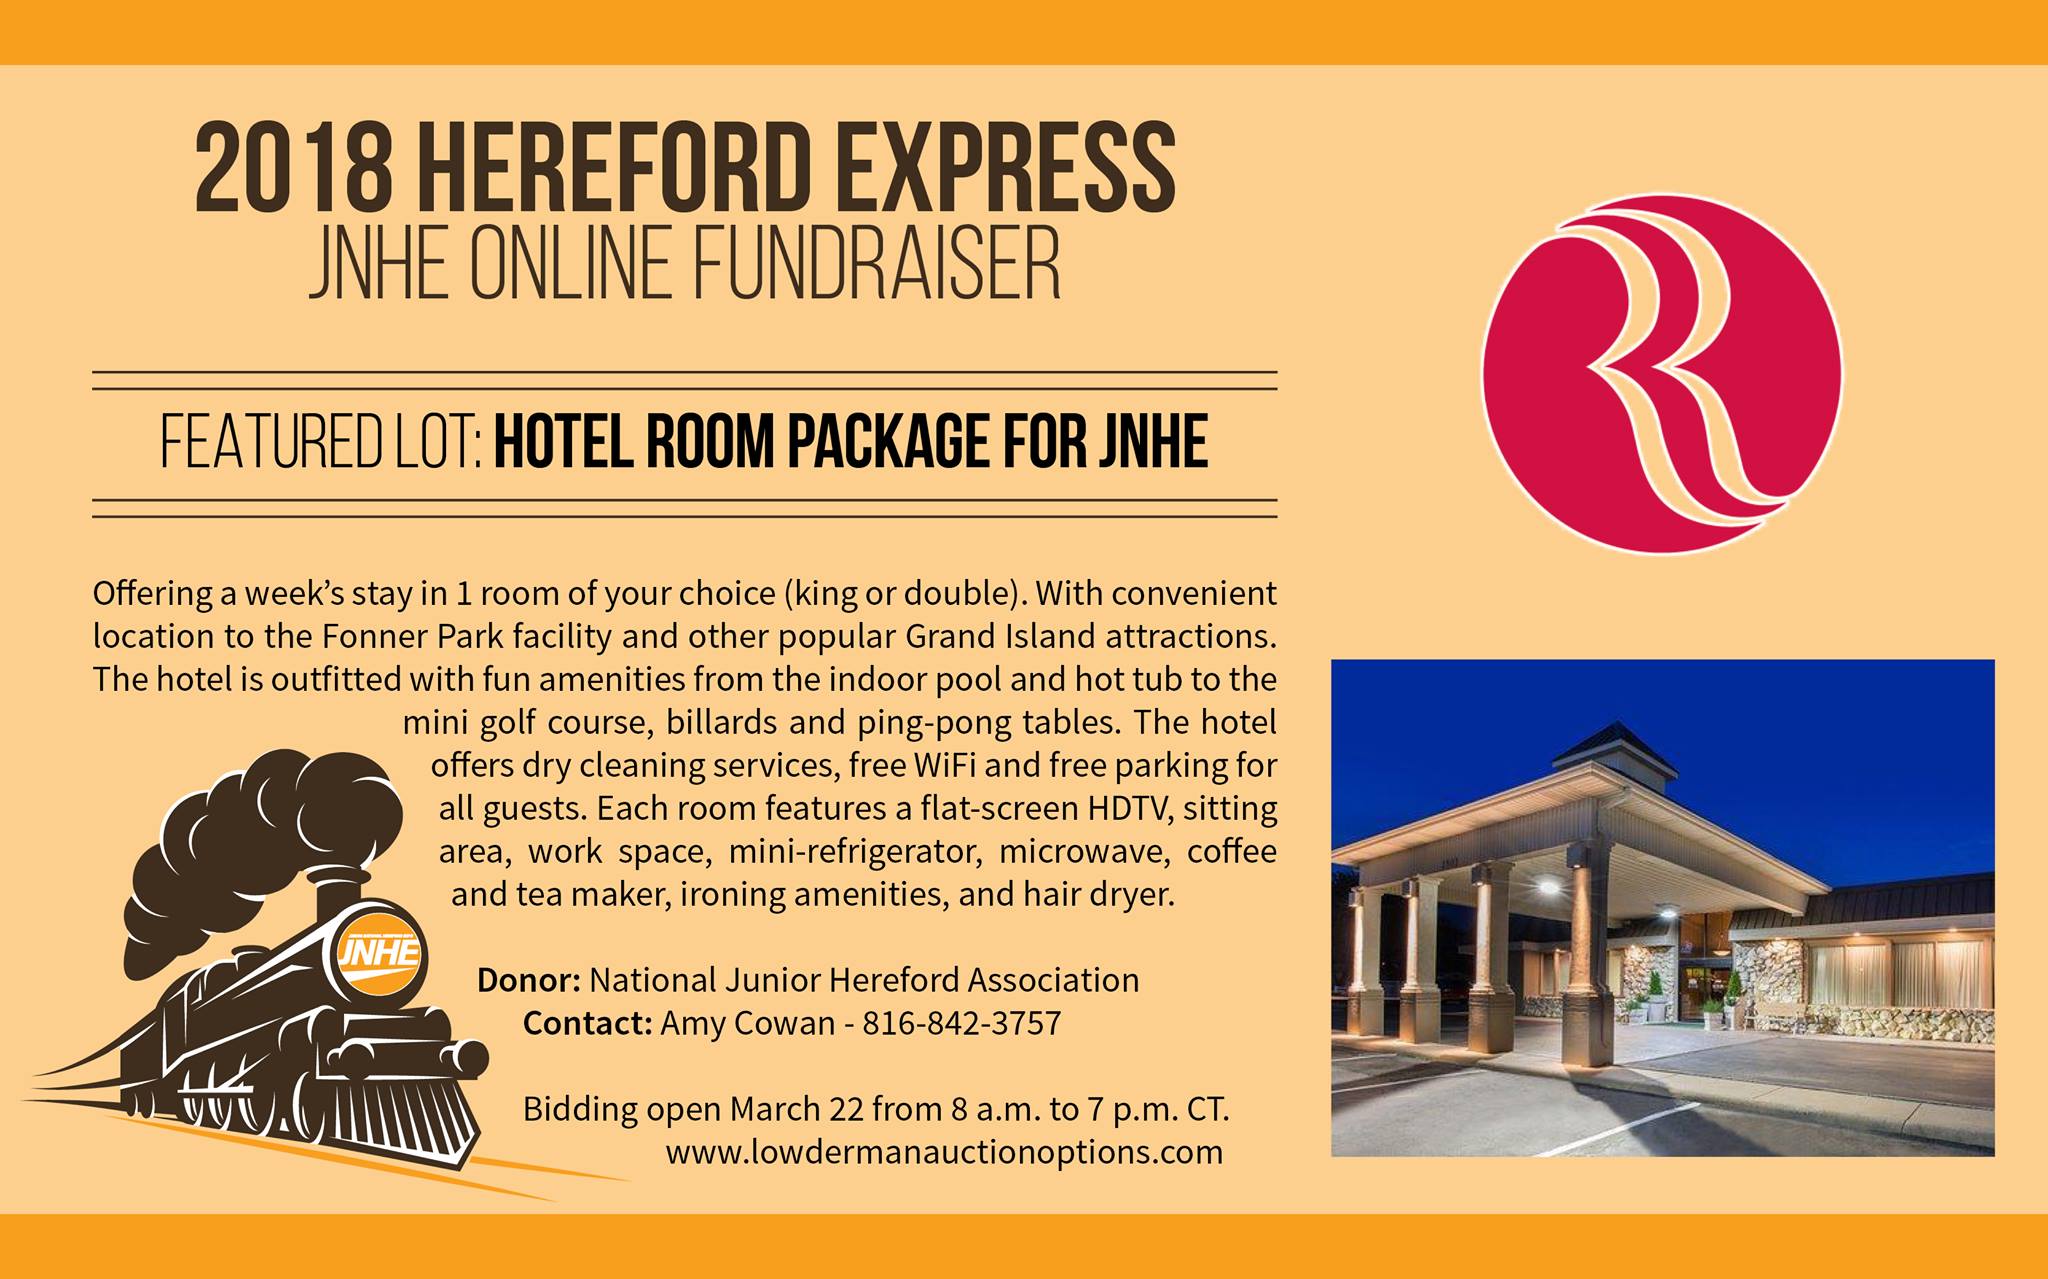 National Junior Hereford Association | 2018 Hereford Express JNHE